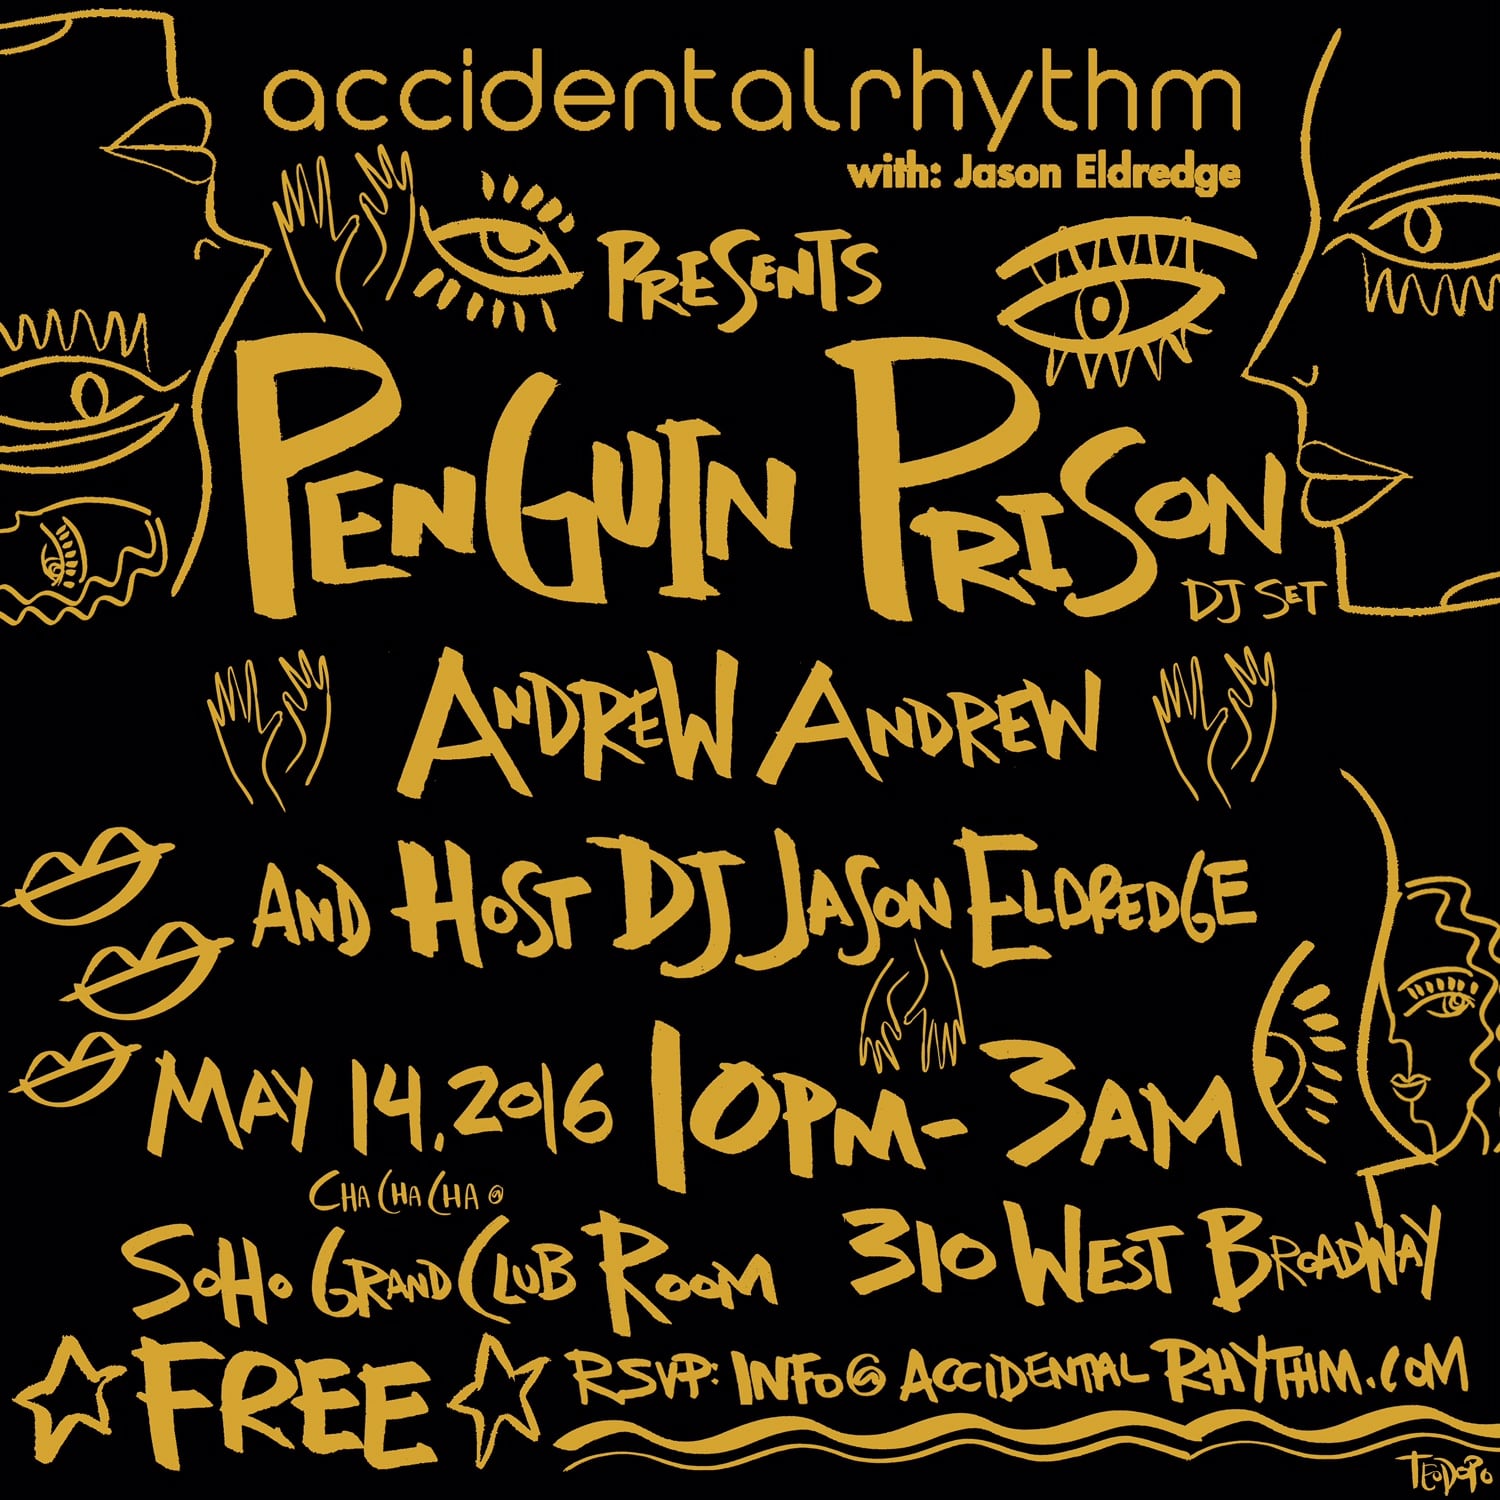 accidentalrhythm presents Penguin Prison (DJ Set) at Club Room at Soho Grand on 05-14-16